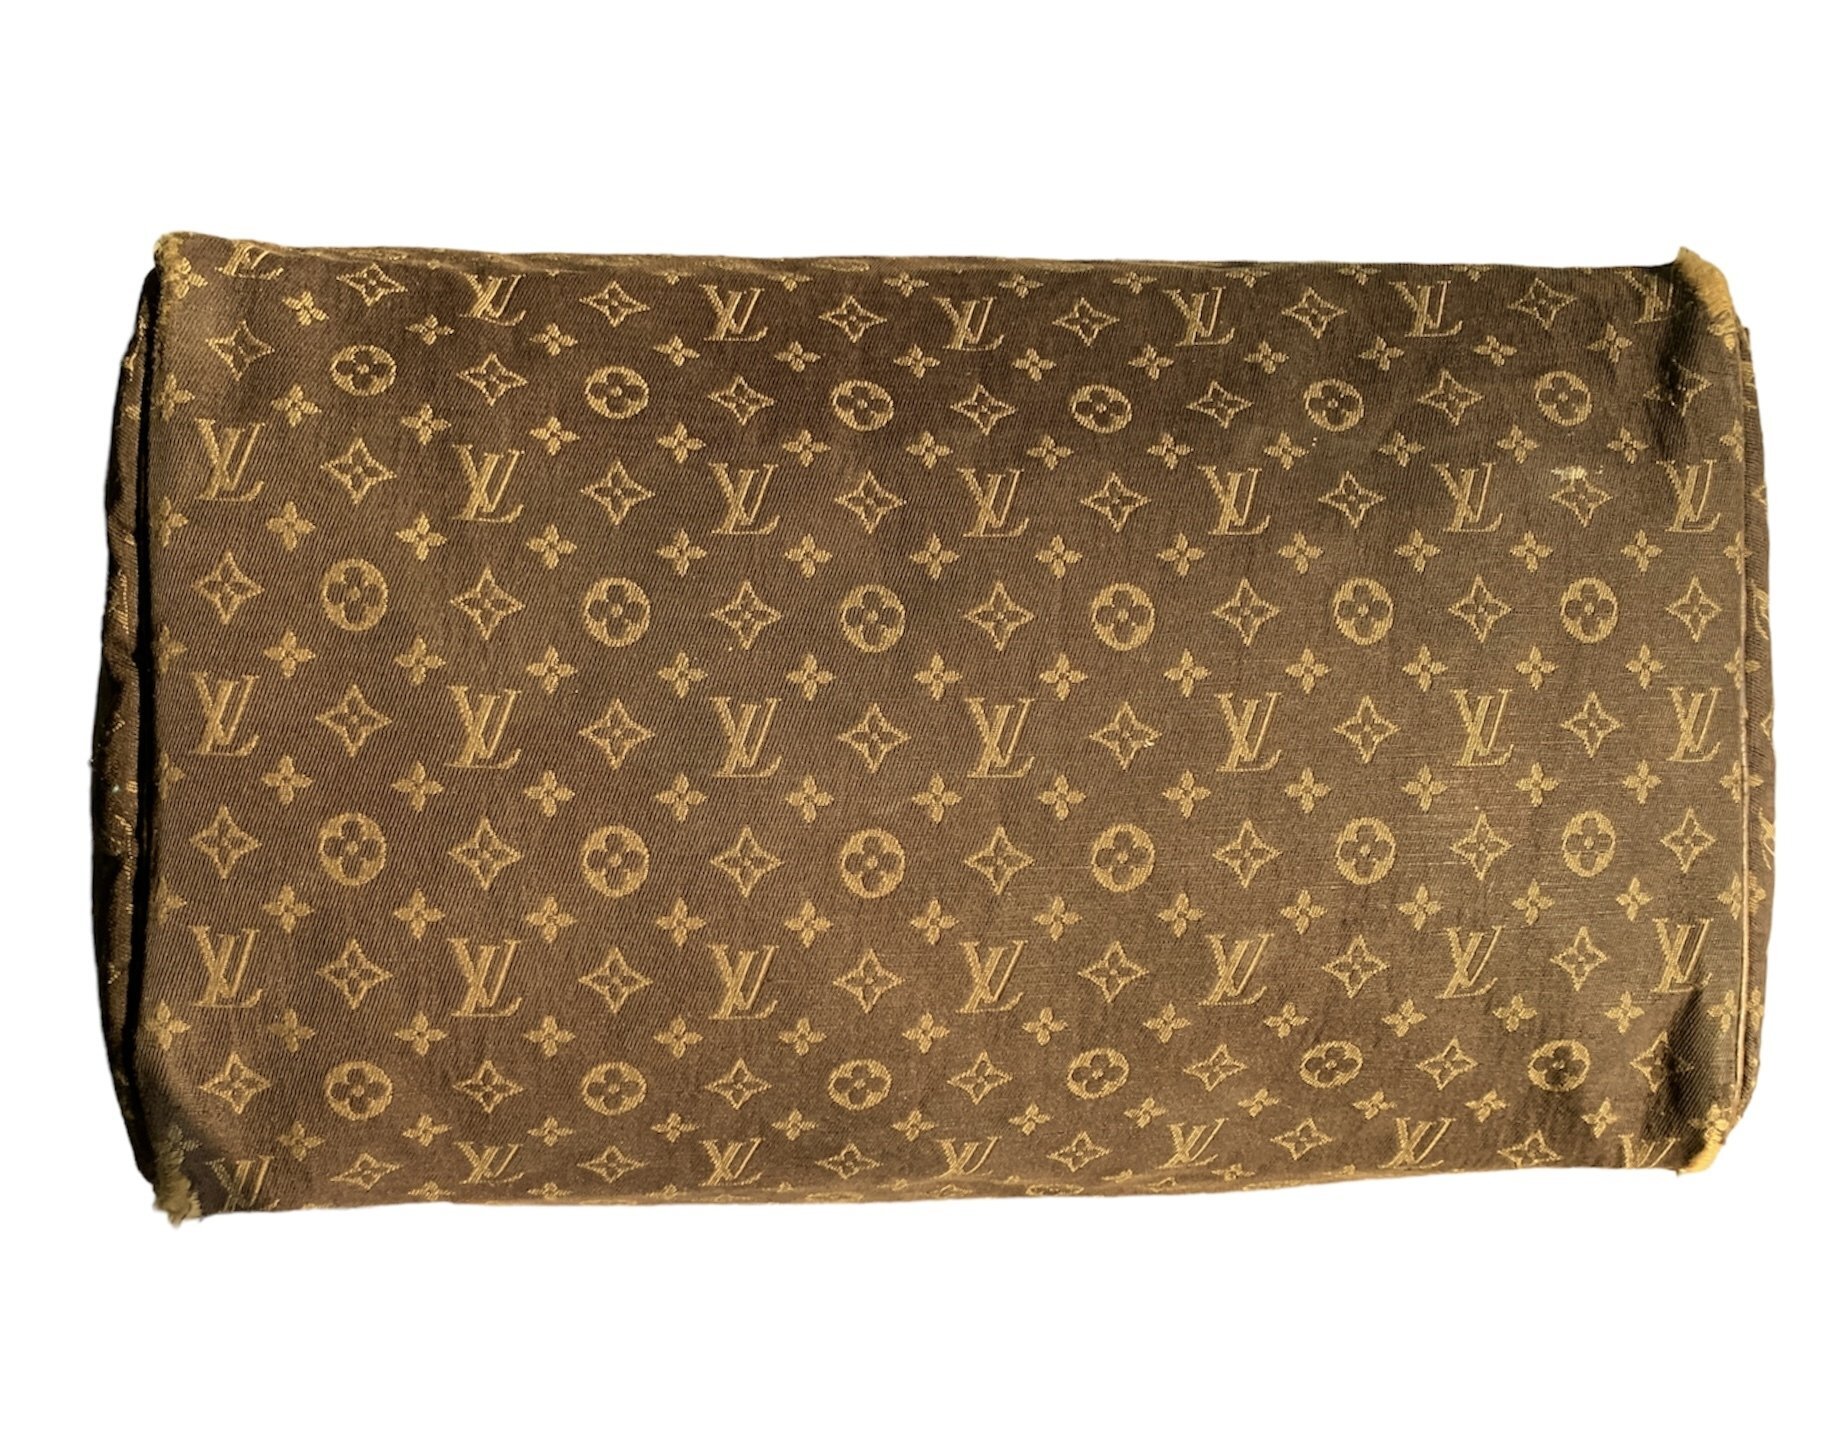 Louis Vuitton Limited Edition Mini Lin Speedy Denim Bag – Bagaholic